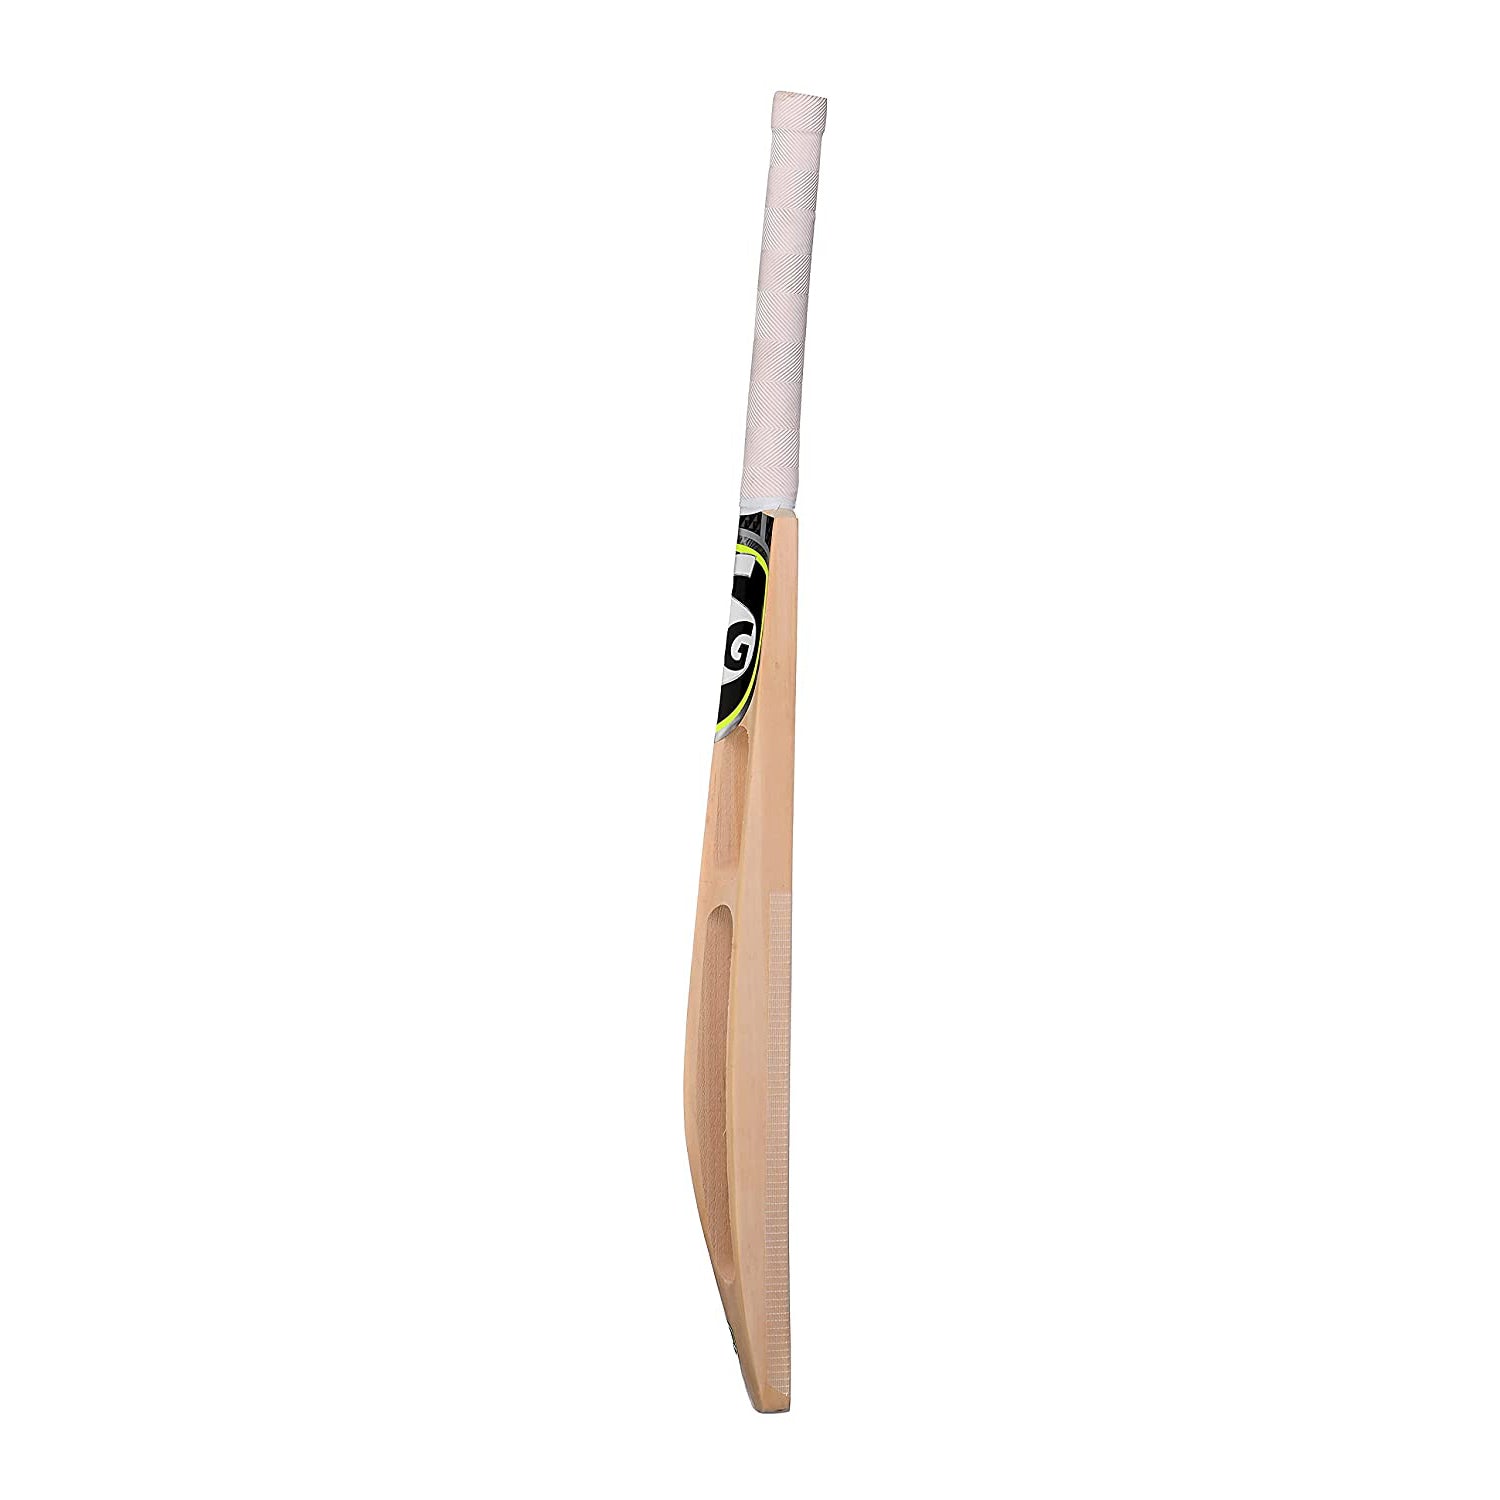 SG T-1200 Kashmir Willow Tennis Cricket Bat - Best Price online Prokicksports.com